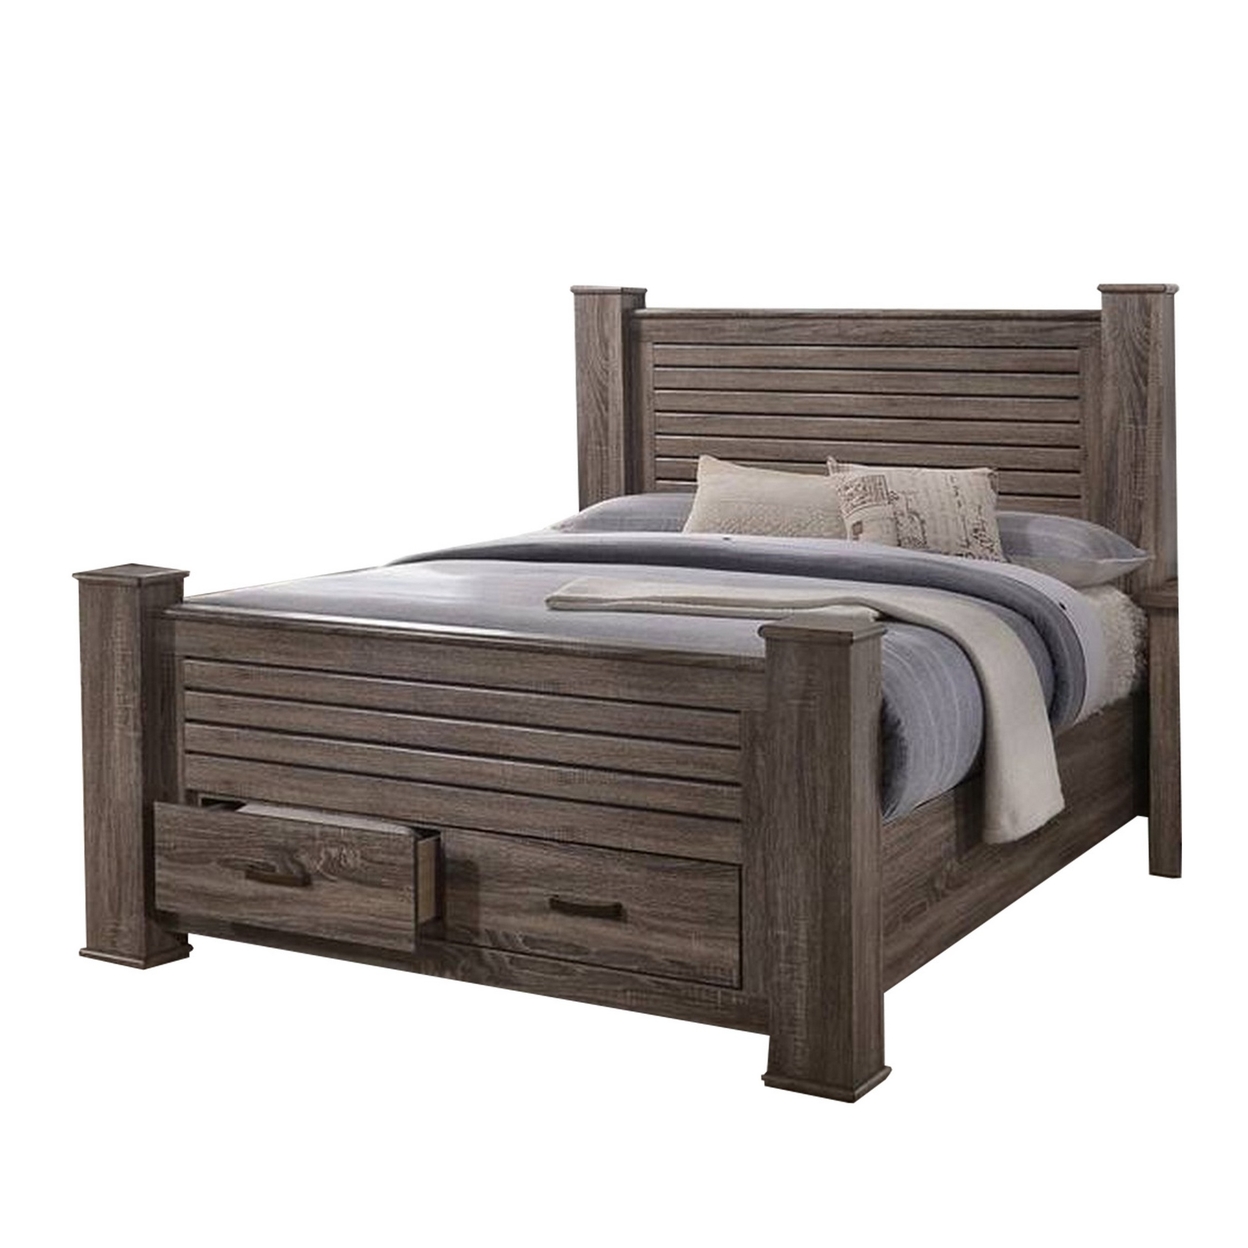 Soma Wood King Size Bed With 2 Gliding Drawers, Metal Bar Handles, Oak Gray- Saltoro Sherpi